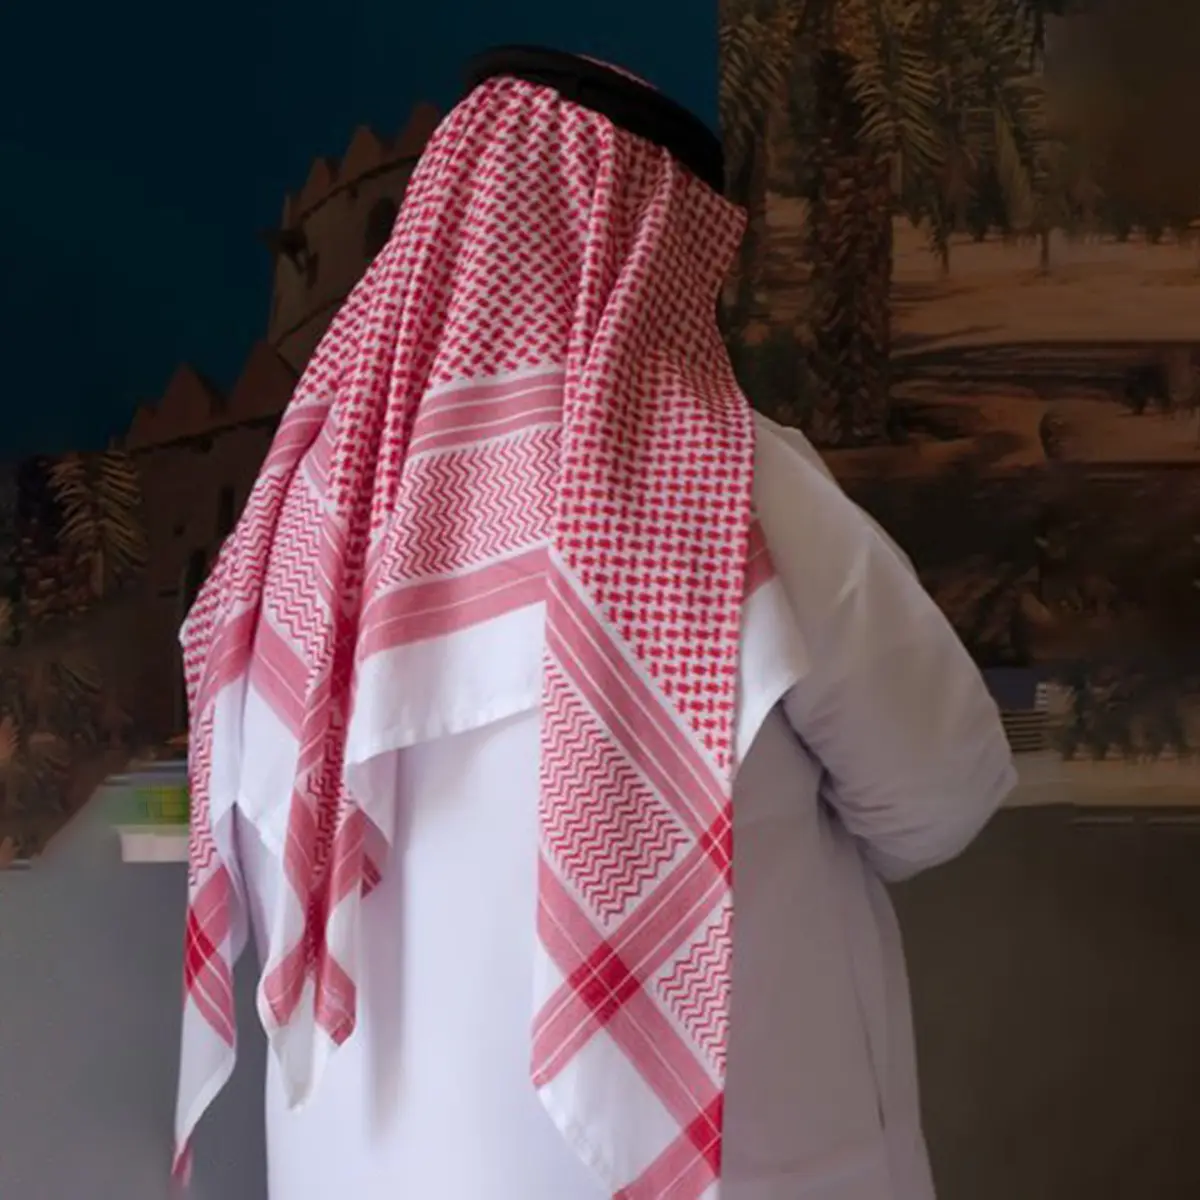 Adulto Saudi Palestine kefiah Red Shemagh arabo Premium Wrap copricapo musulmano foulard per uomo